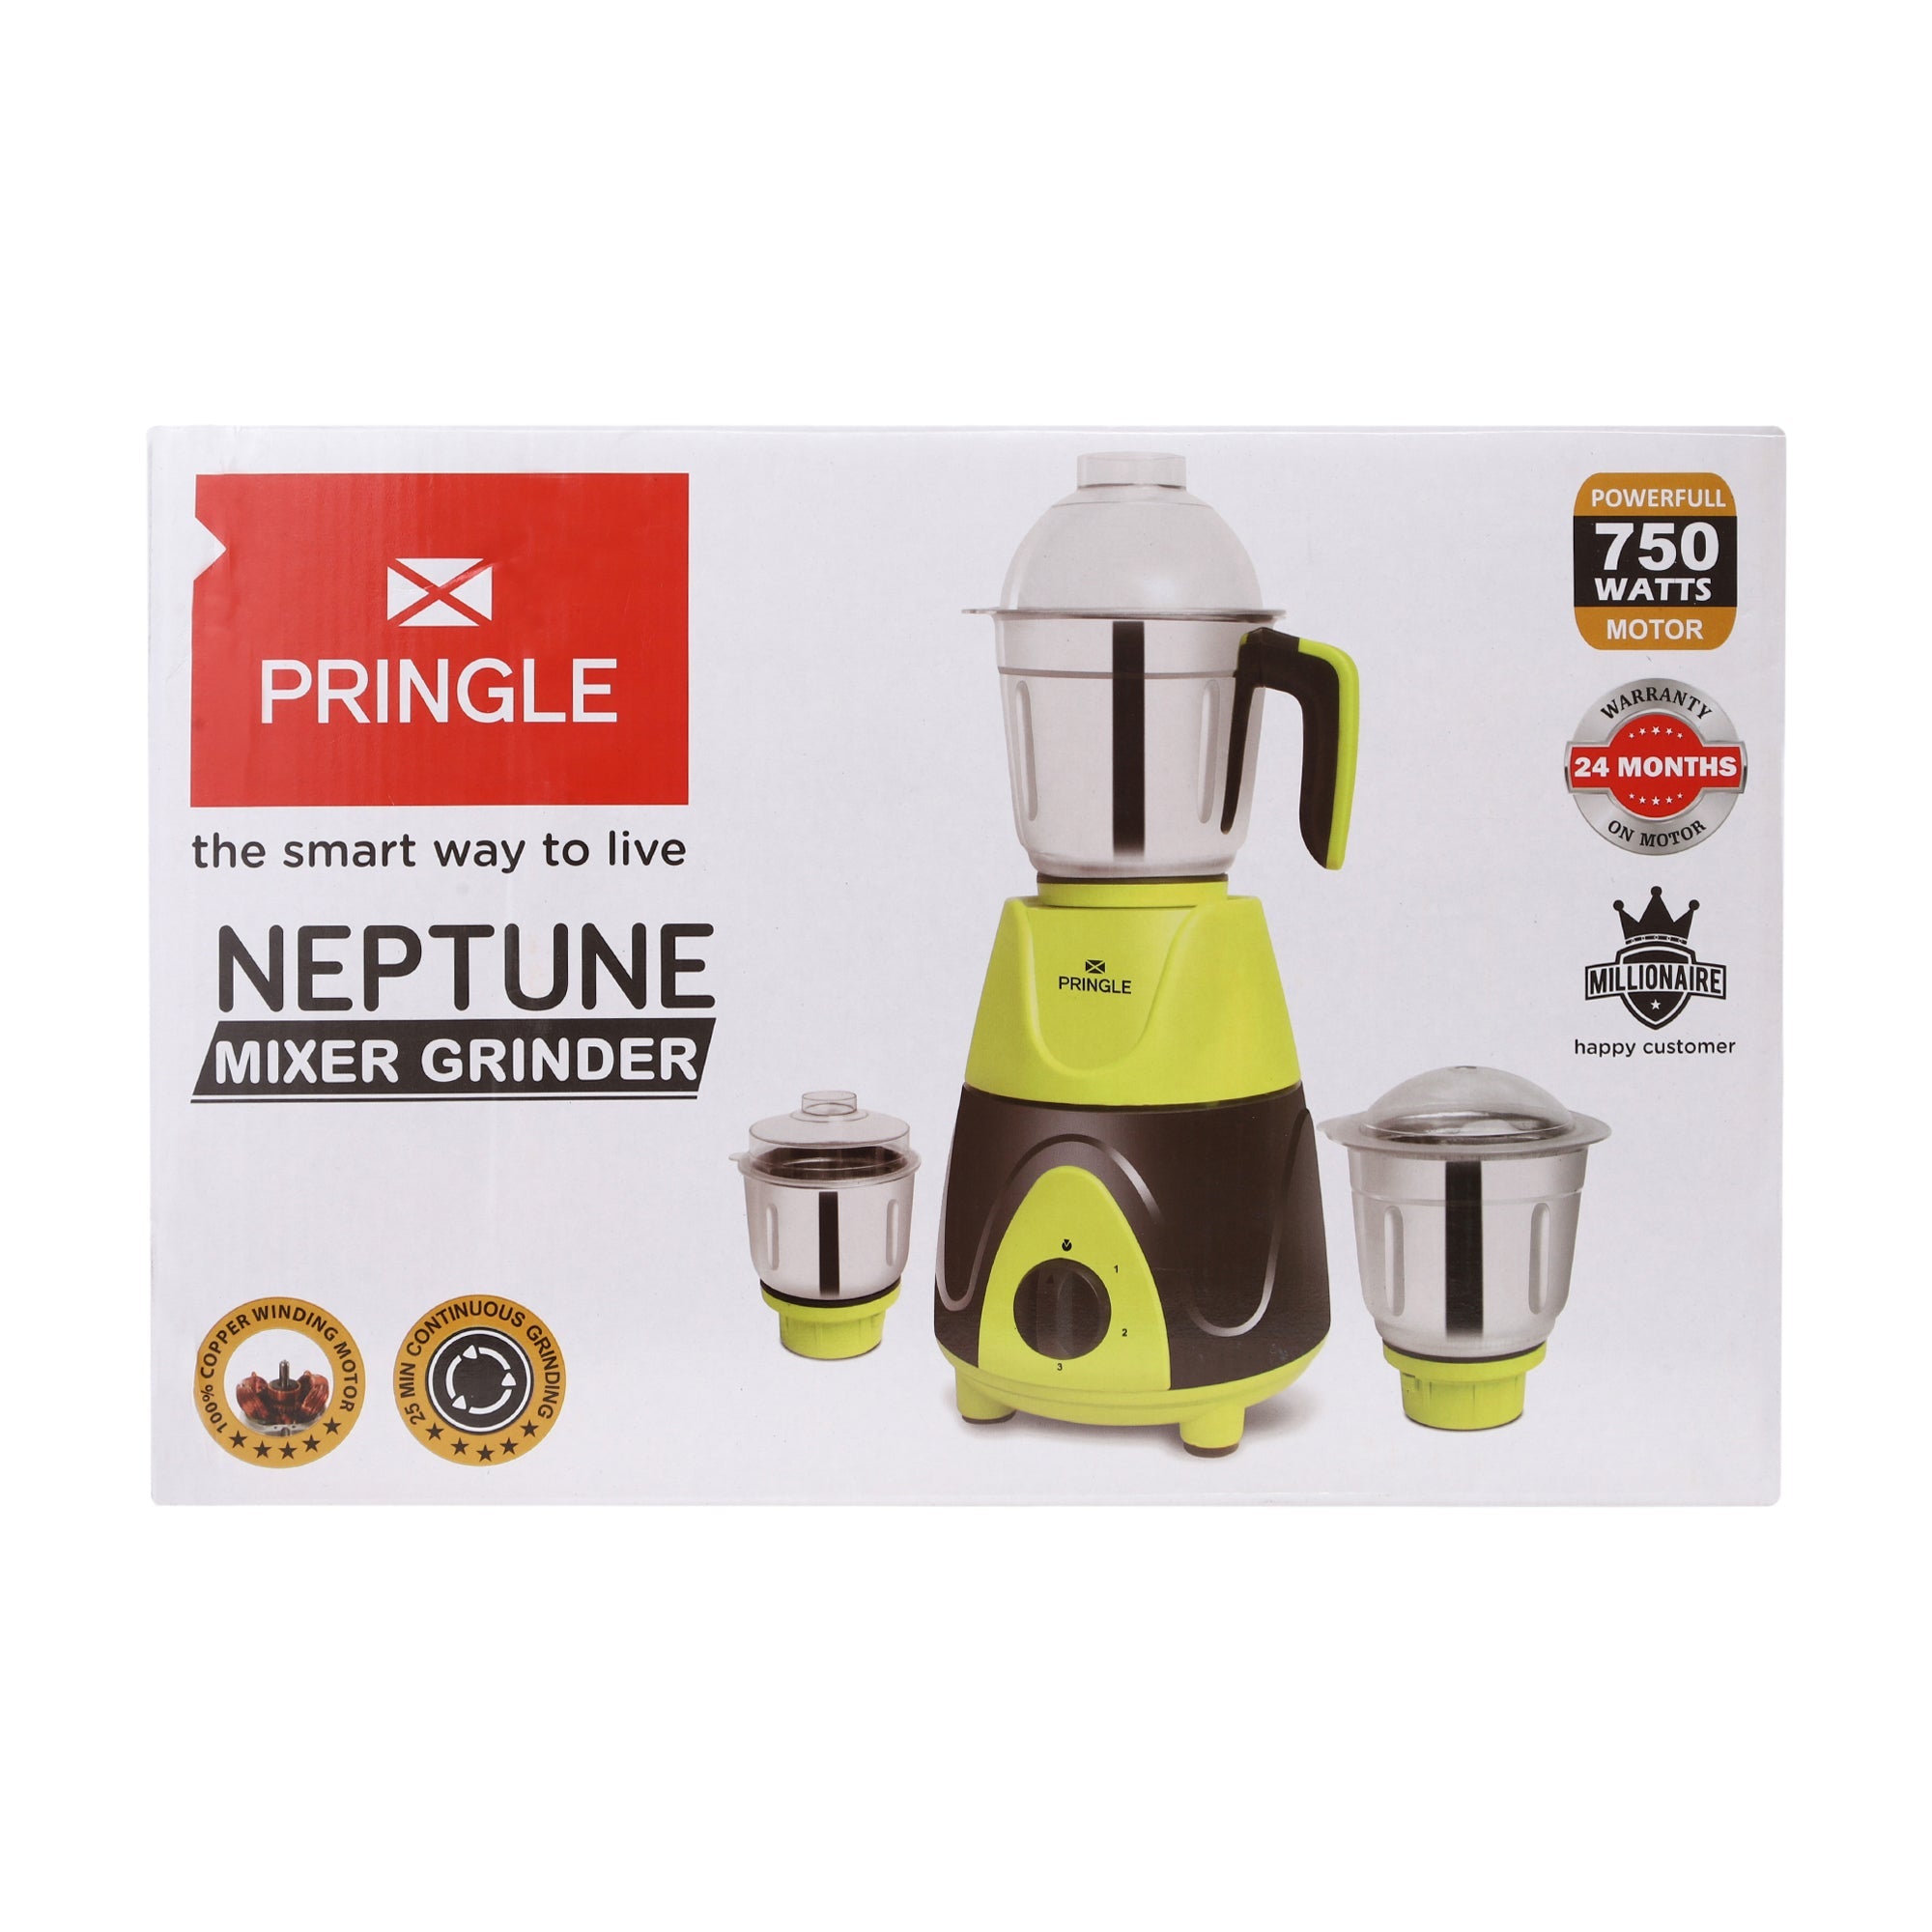 Pringle Neptune 750Watt Mixer Grinder with 3 Stainless Steel Leak-proof Jars, 3 speed & Pulse function,(100% Copper Motor) 2 years warranty - Pringle Appliances